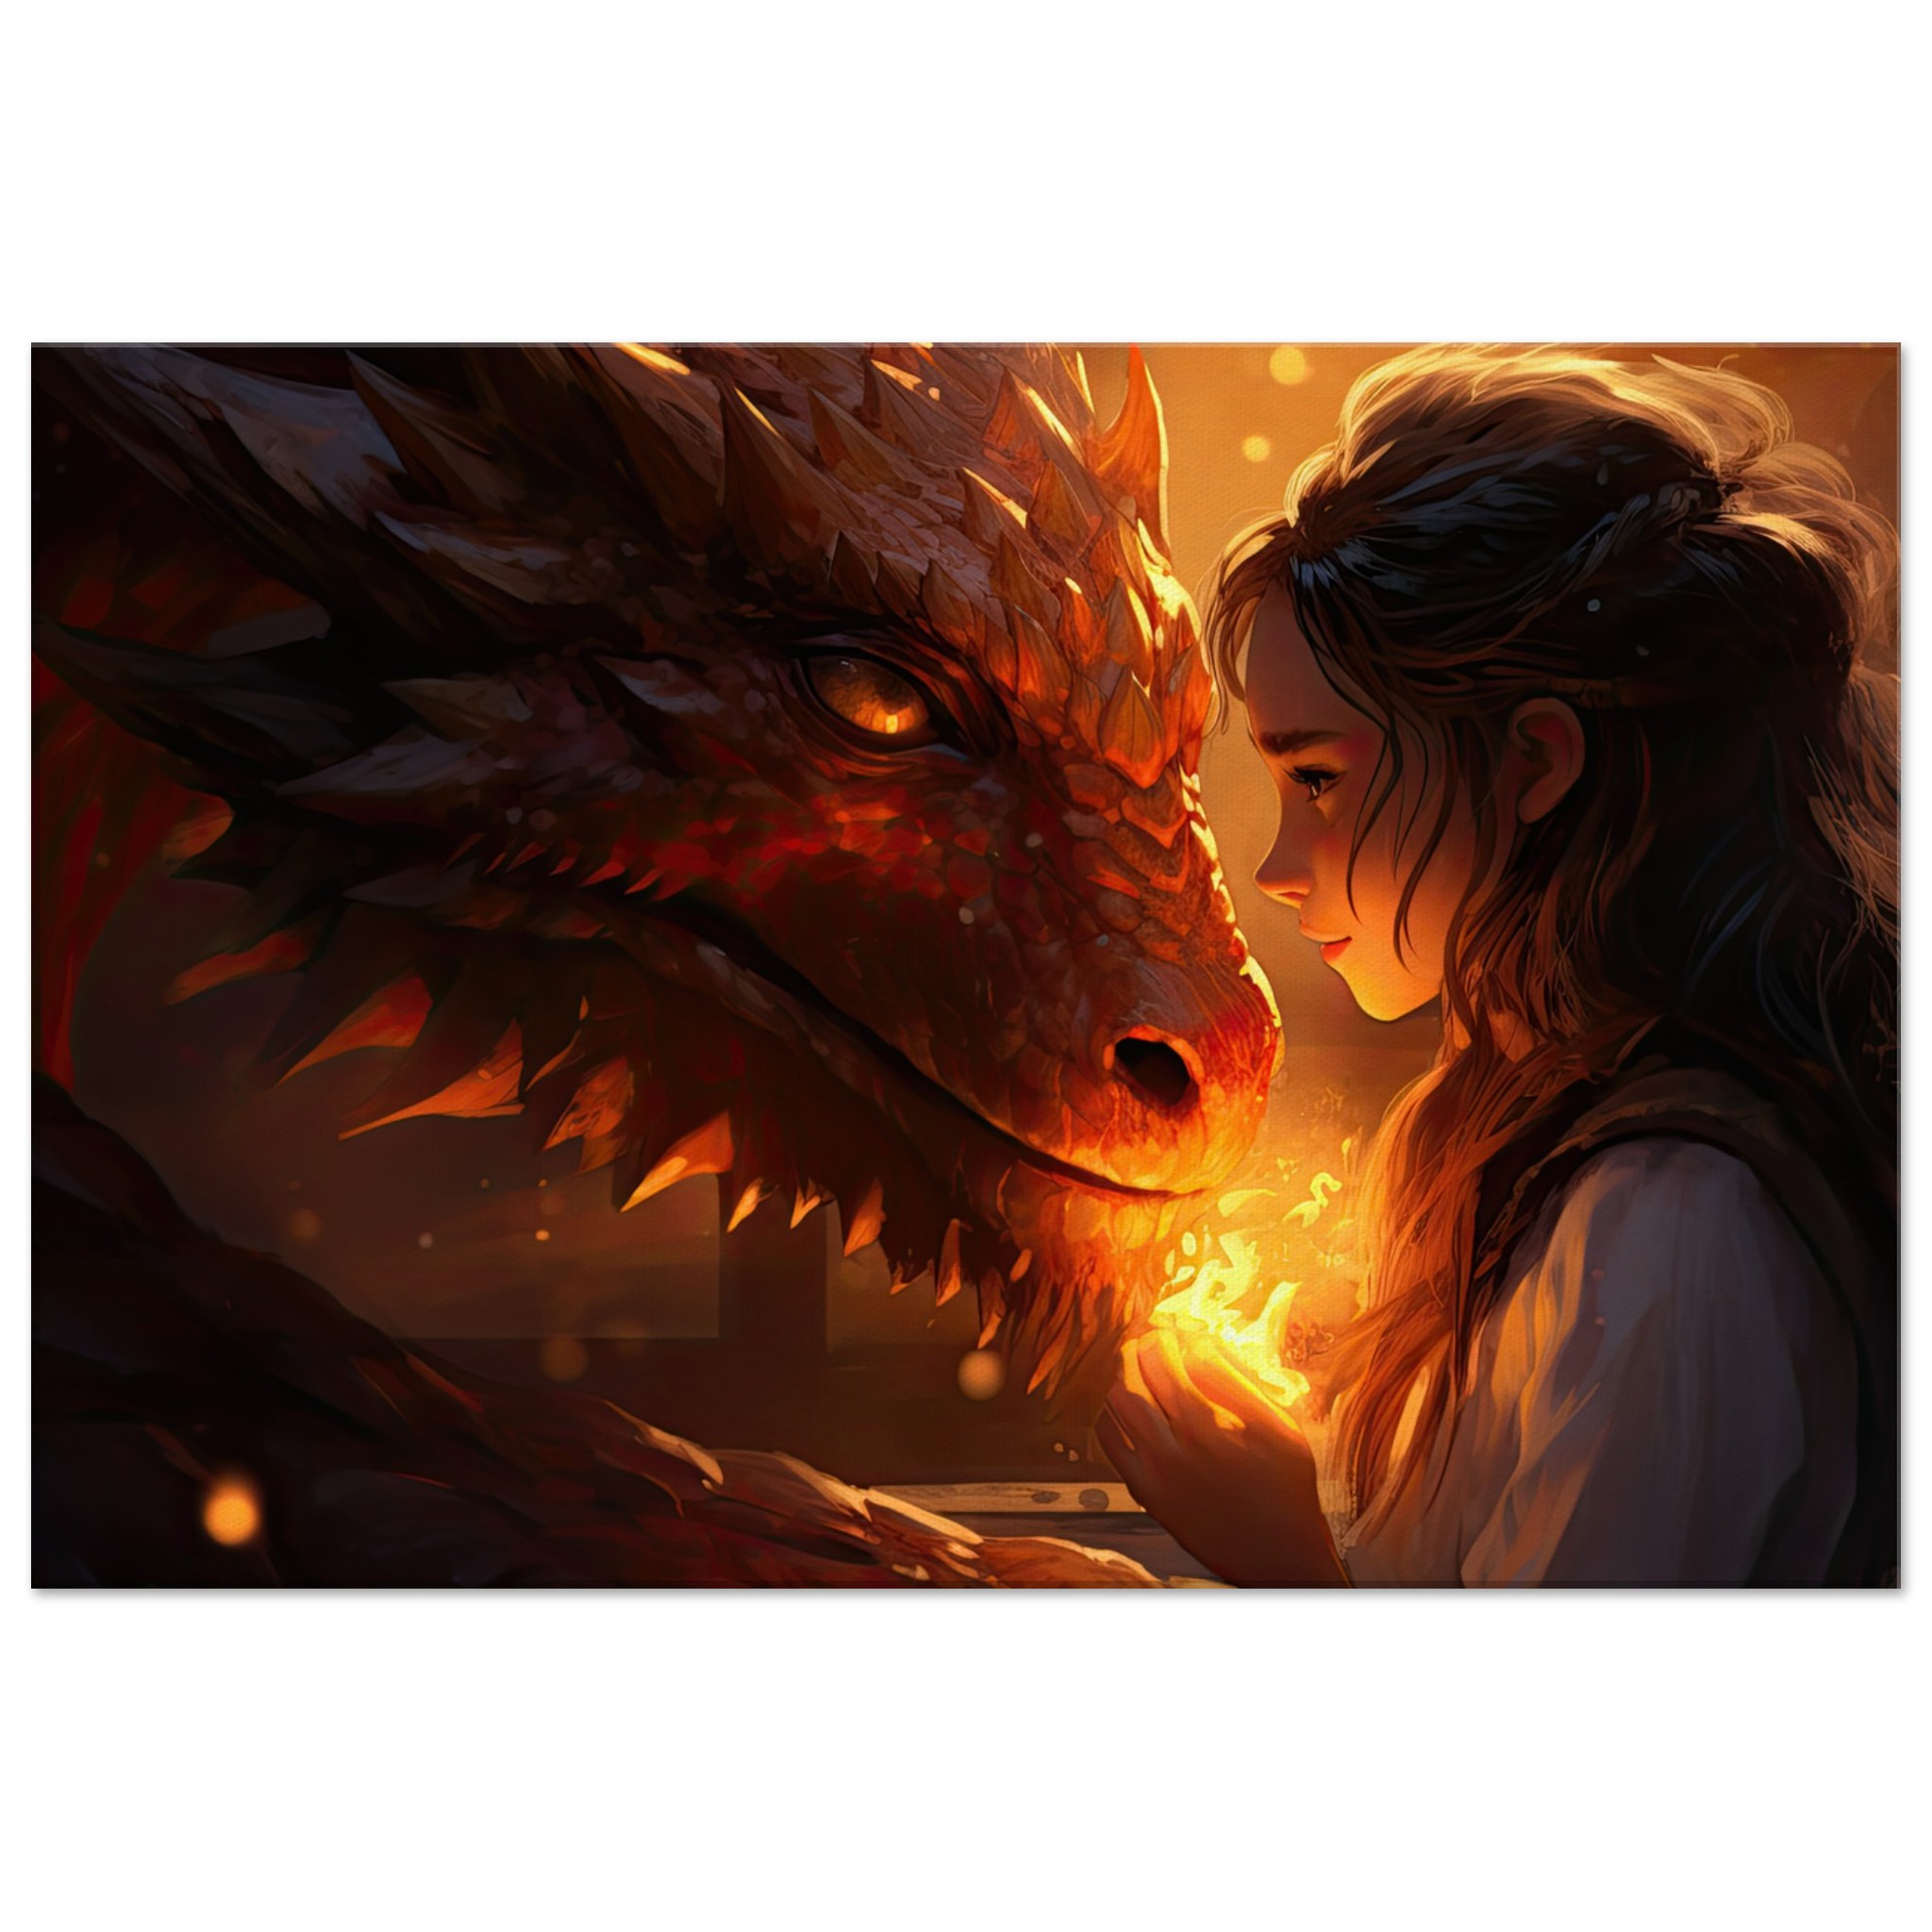 Magical Friendship - Girl and Dragon - Canvas Print - 50x75 cm / 20x30″, Slim